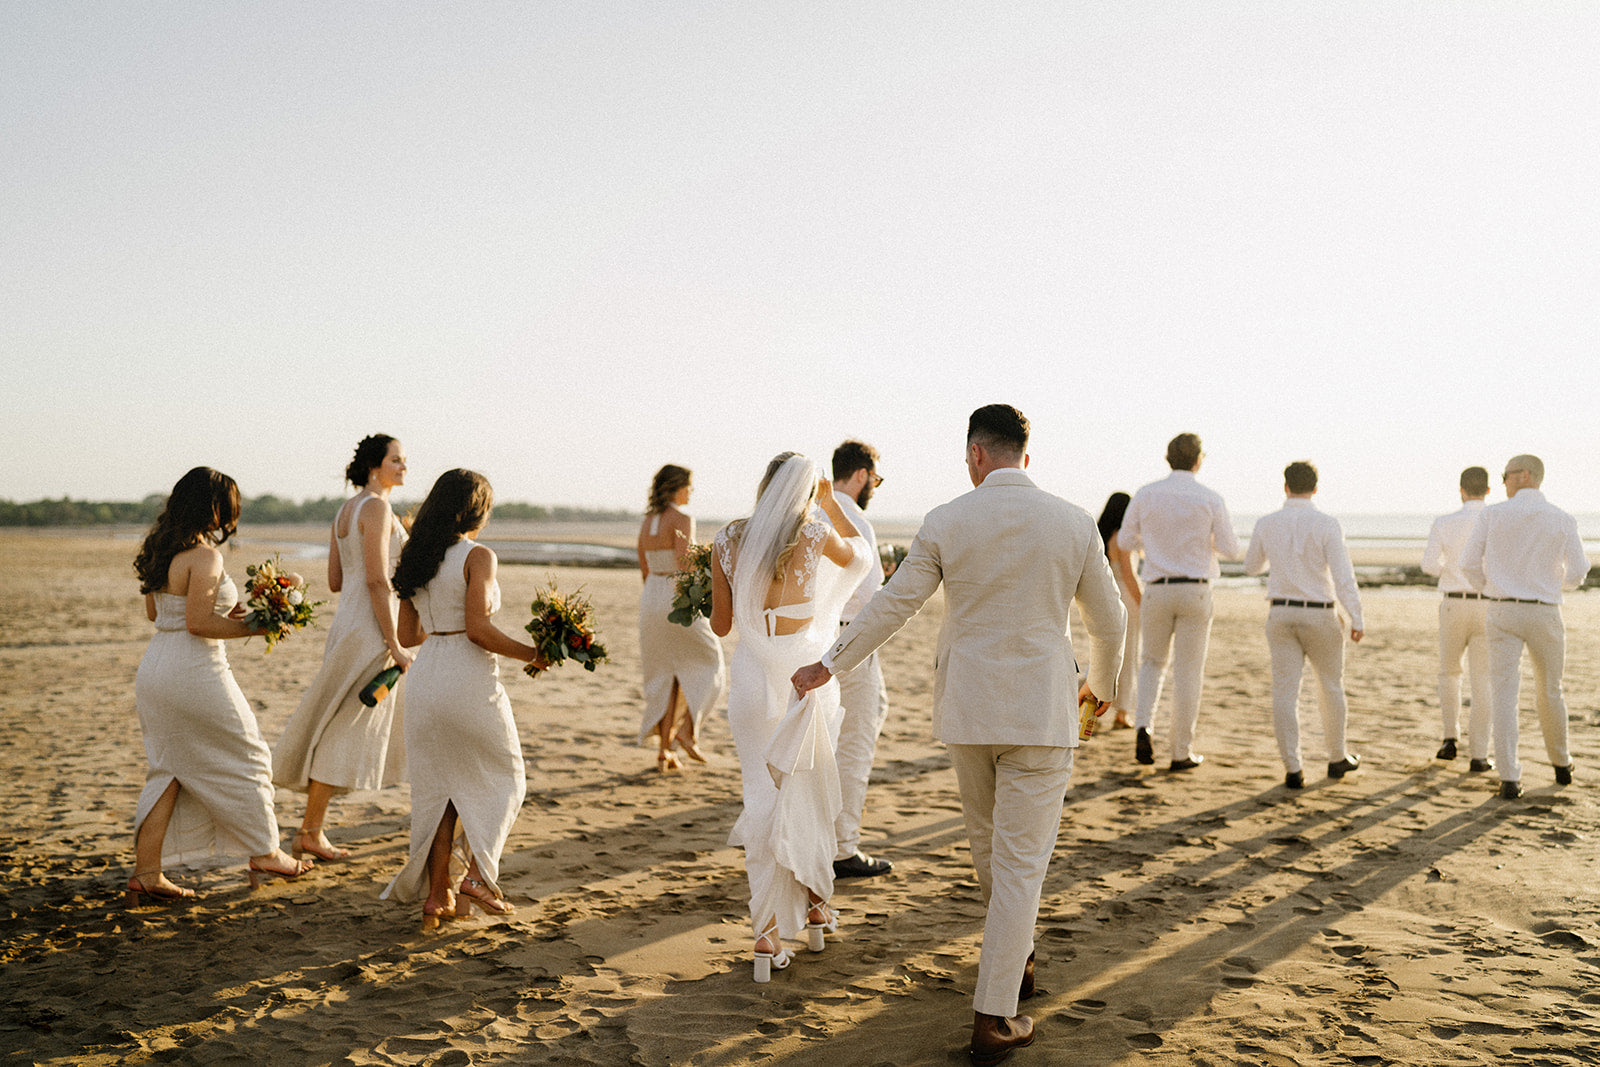 Hannah & Austin - Beija Flor Real Wedding - Bride Groom Bridesmaids and Goomsmen Walking at the Beach Side